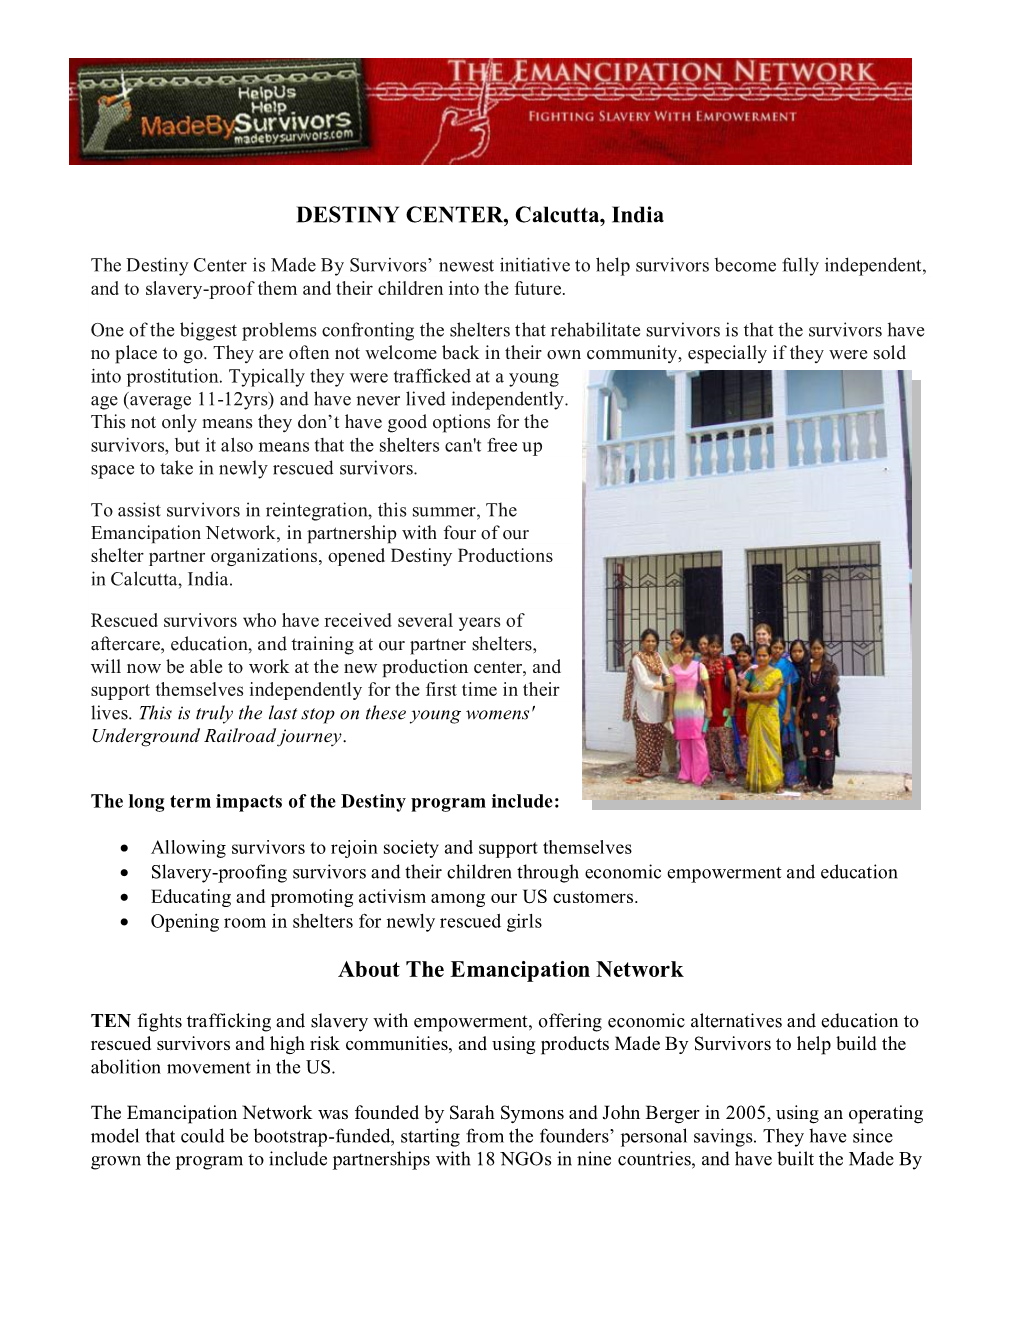 DESTINY CENTER, Calcutta, India About the Emancipation Network